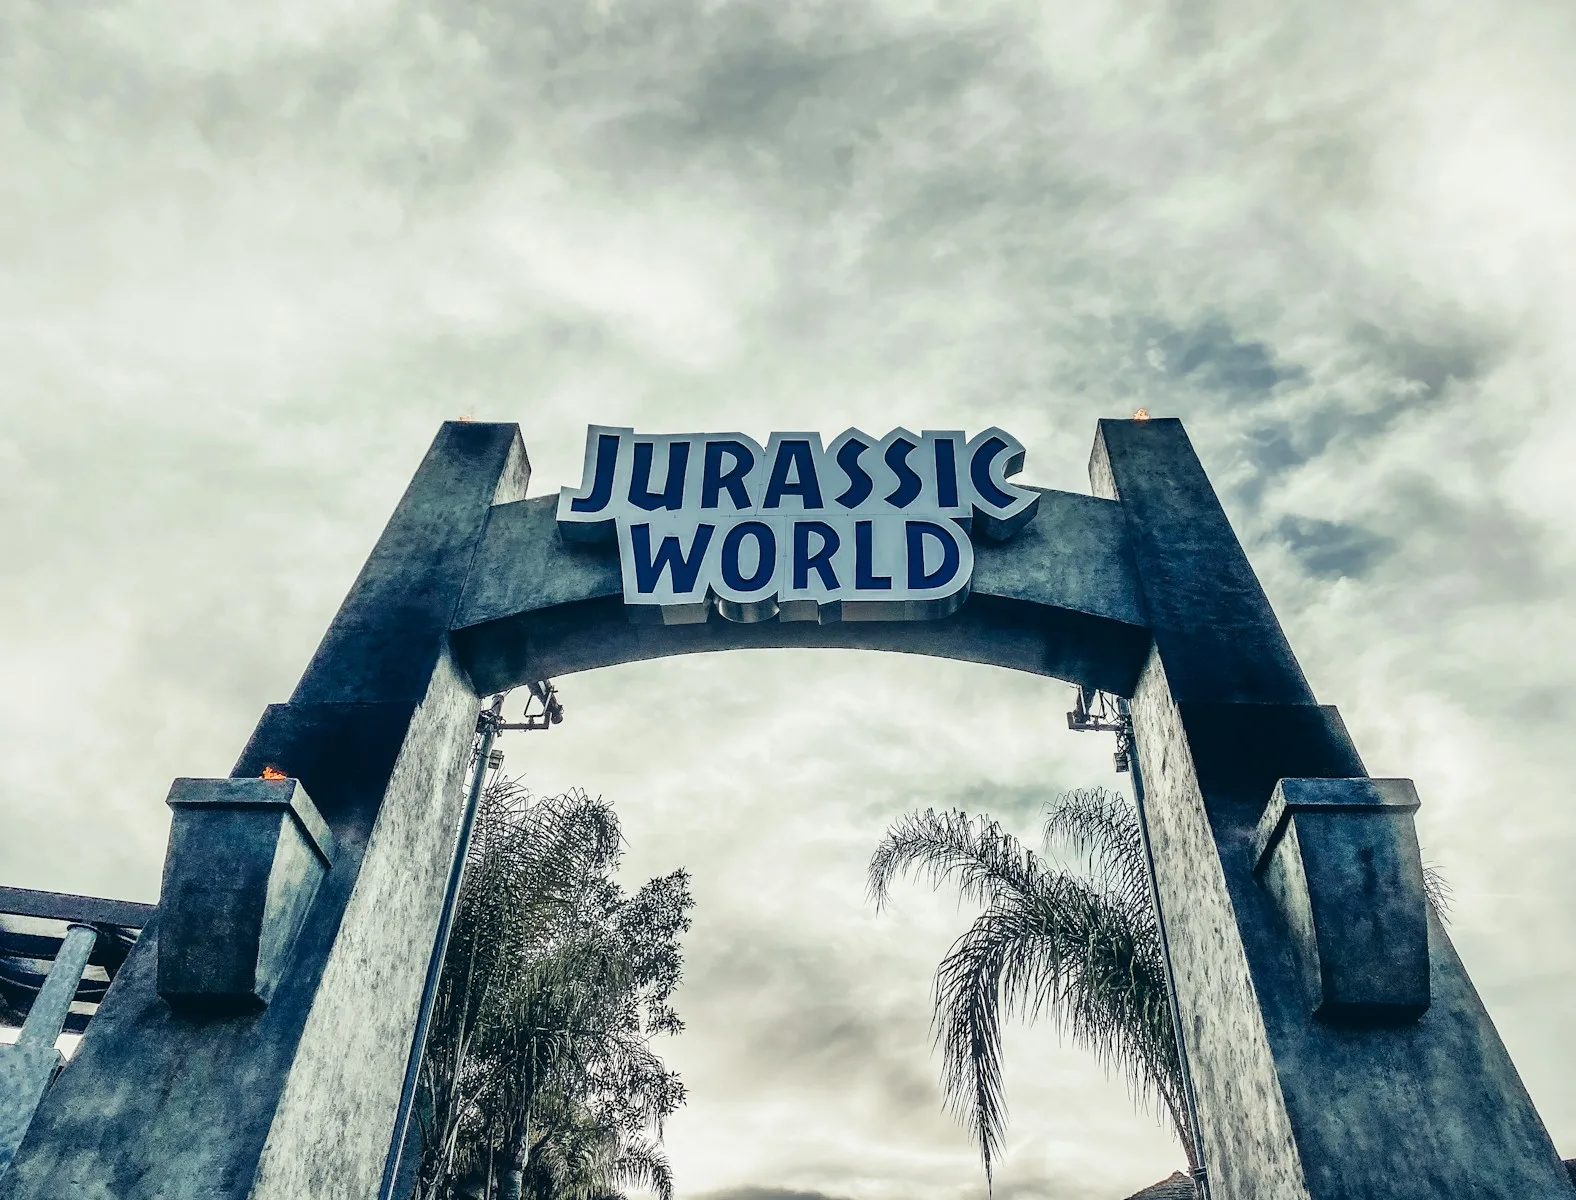 Oscar Winner Mahershala Ali May Join New Jurassic World Film - Project ...